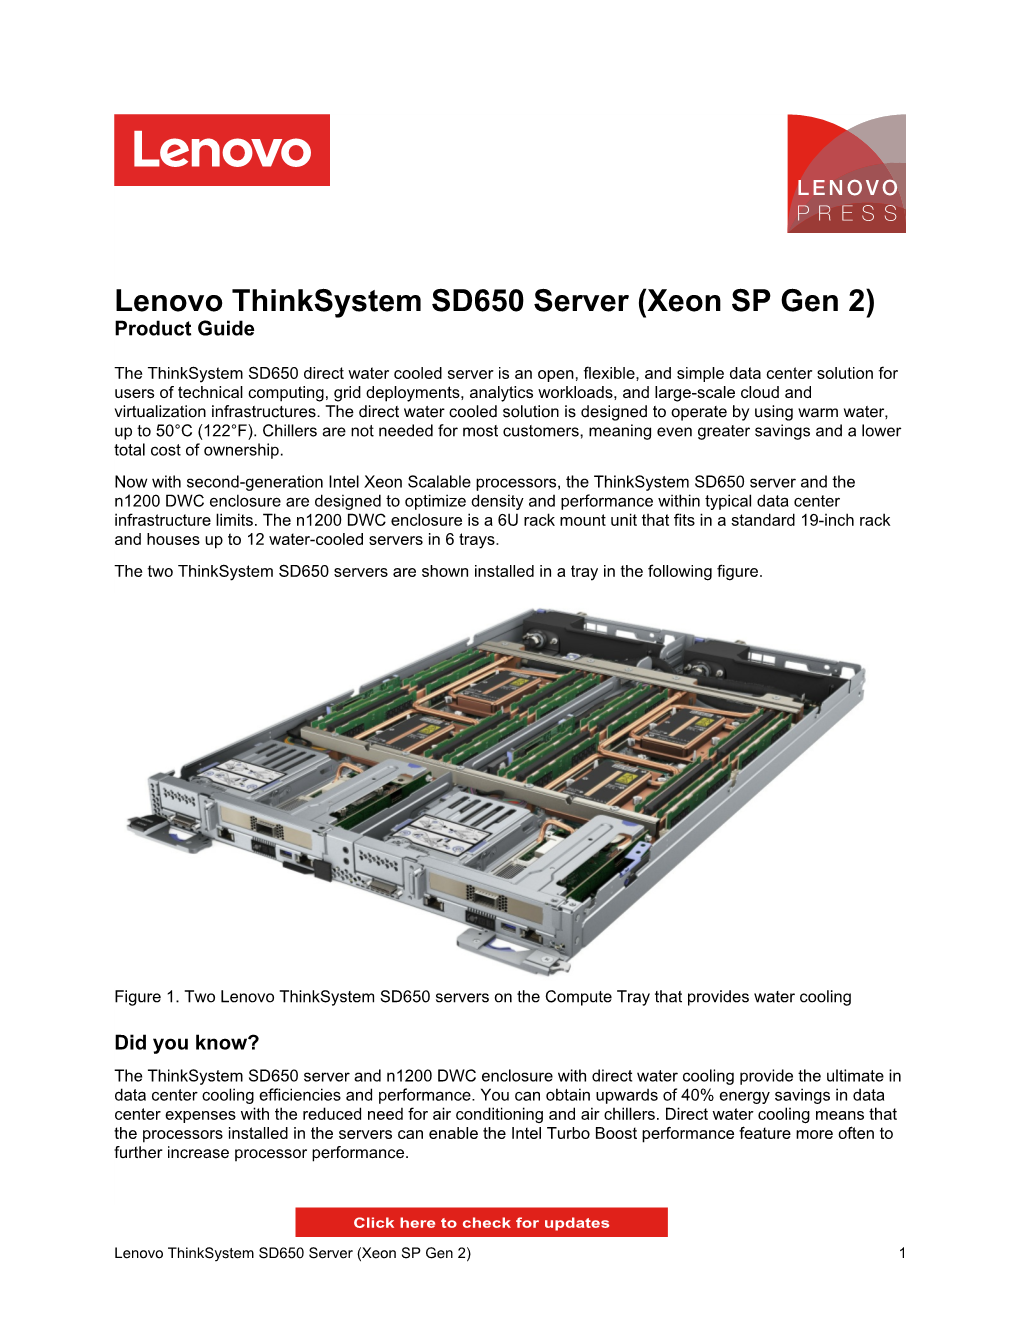 Lenovo Thinksystem SD650 Server (Xeon SP Gen 2) Product Guide